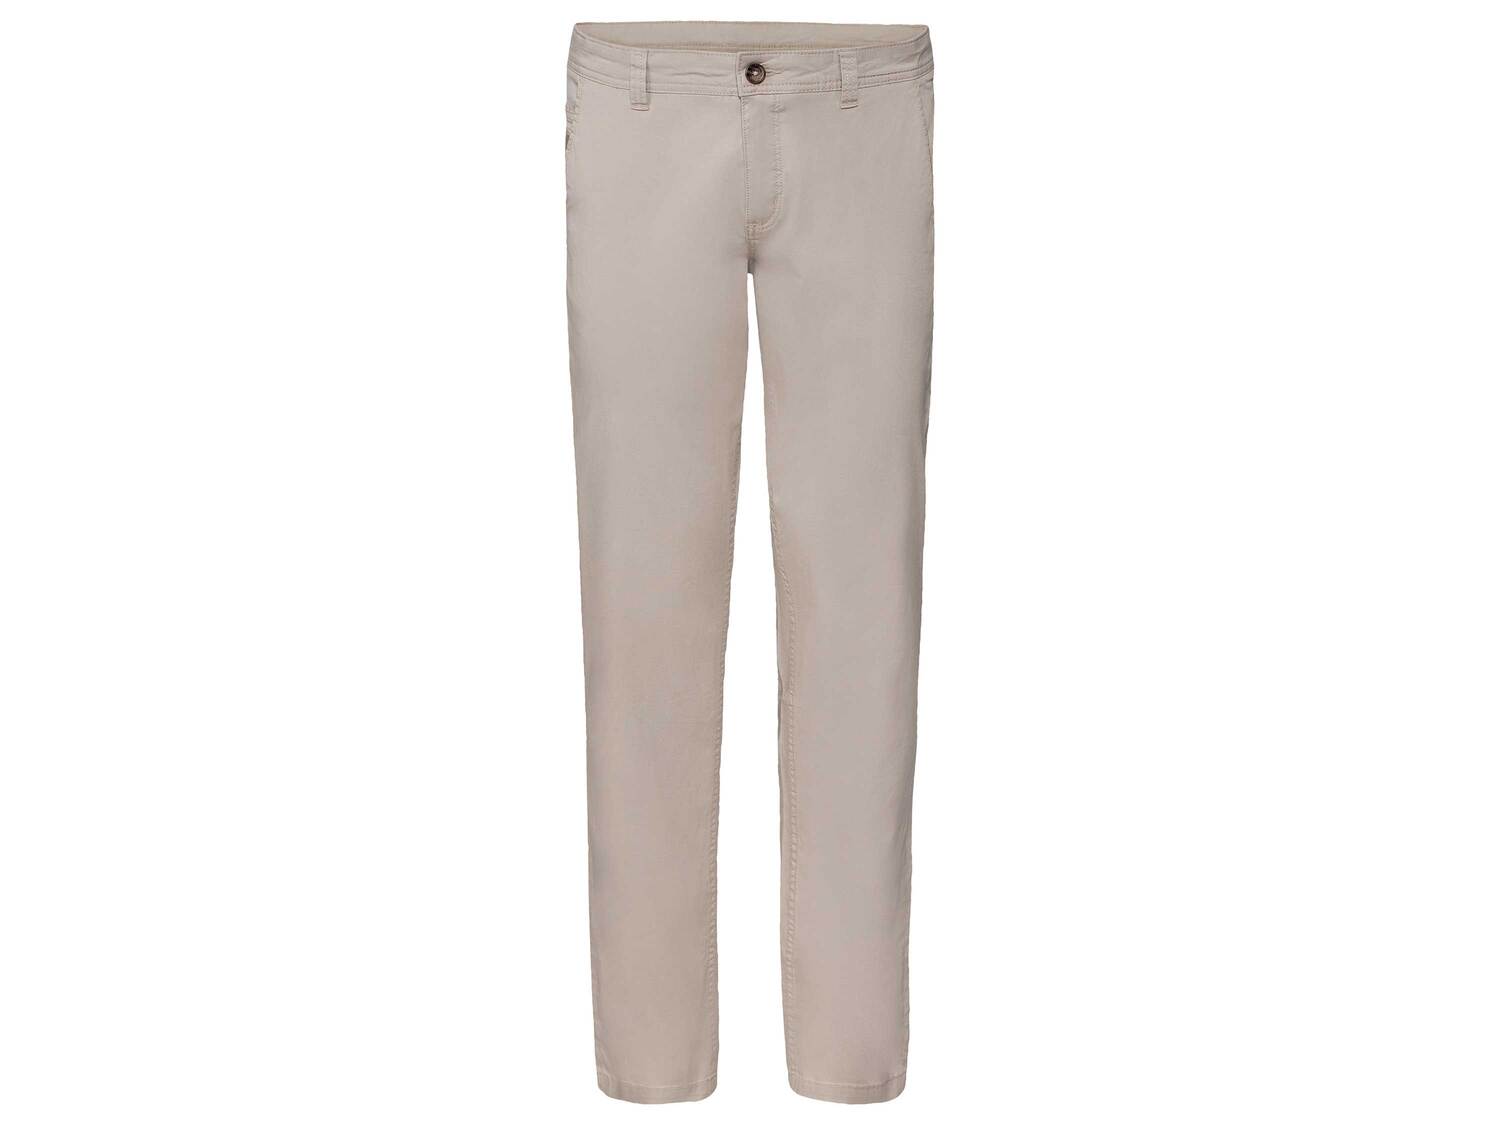 Pantalon chino , le prix 9.99 € 
- Du 38 au 46 selon modèle.
- Ex. 98 % coton ...